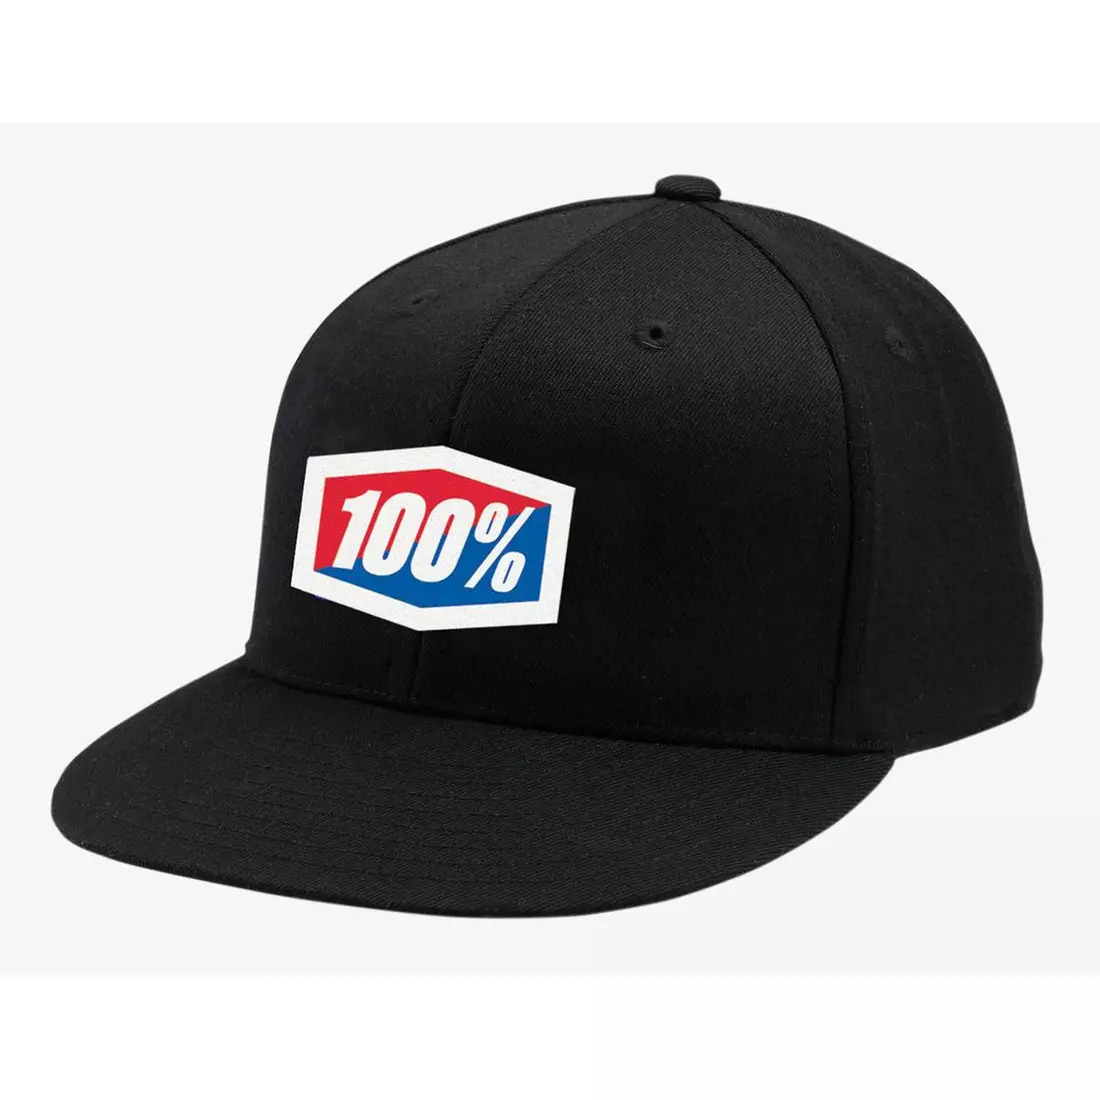 100% baseball sapka official J-Fit flexfit hat black STO-20040-001-17